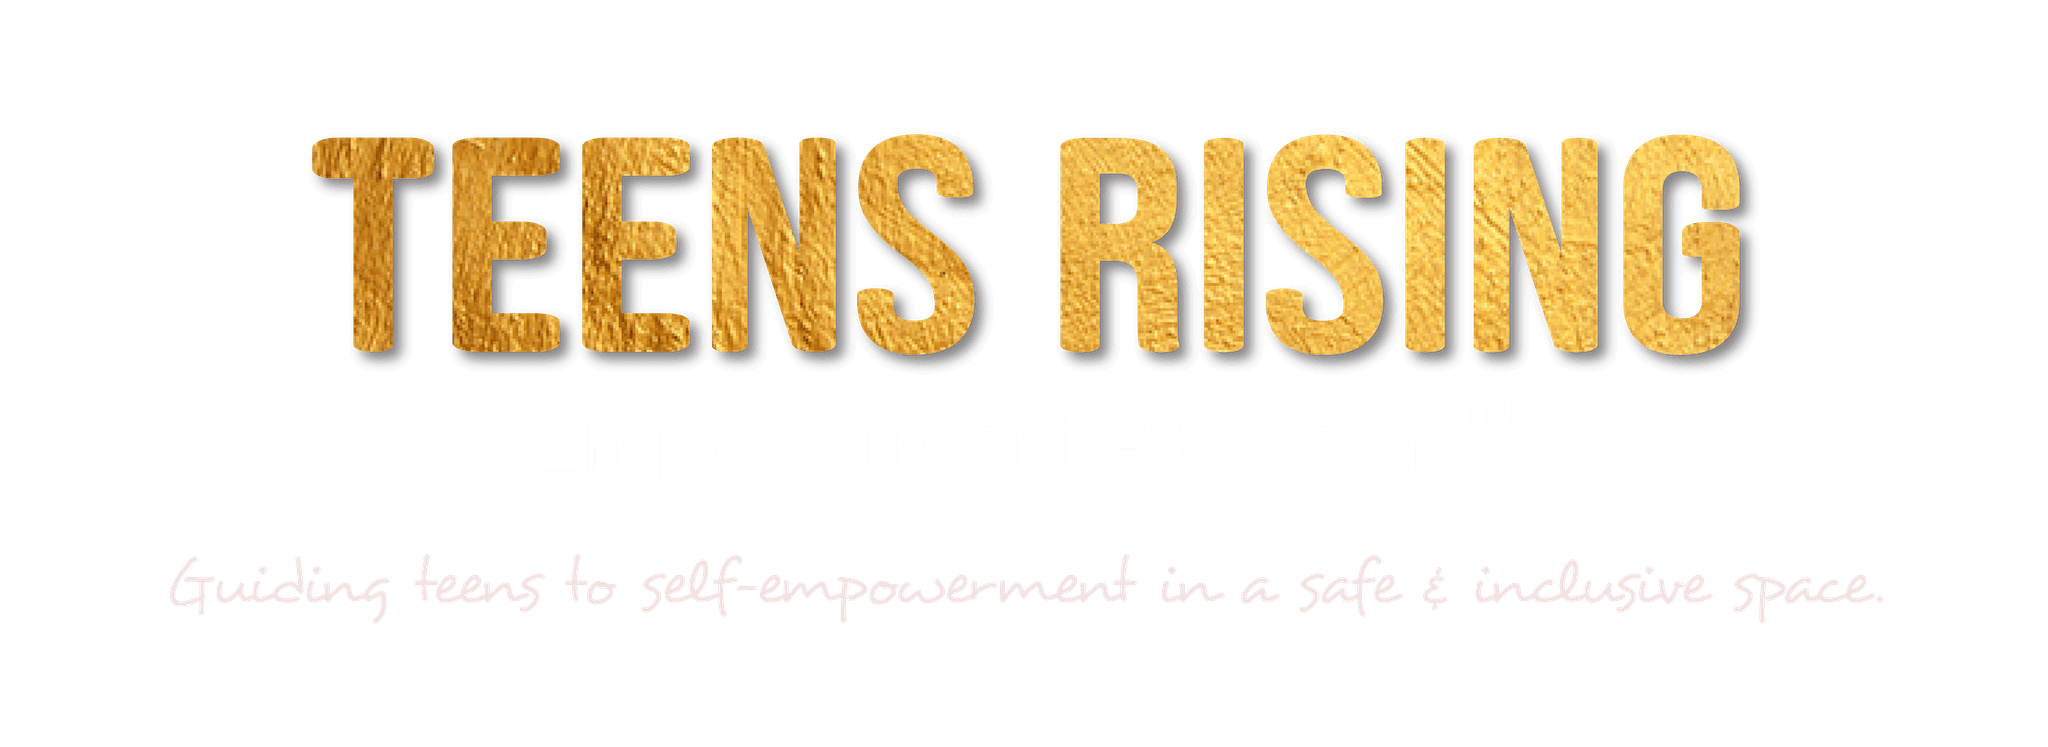 Teens Rising Empowerment Programs™